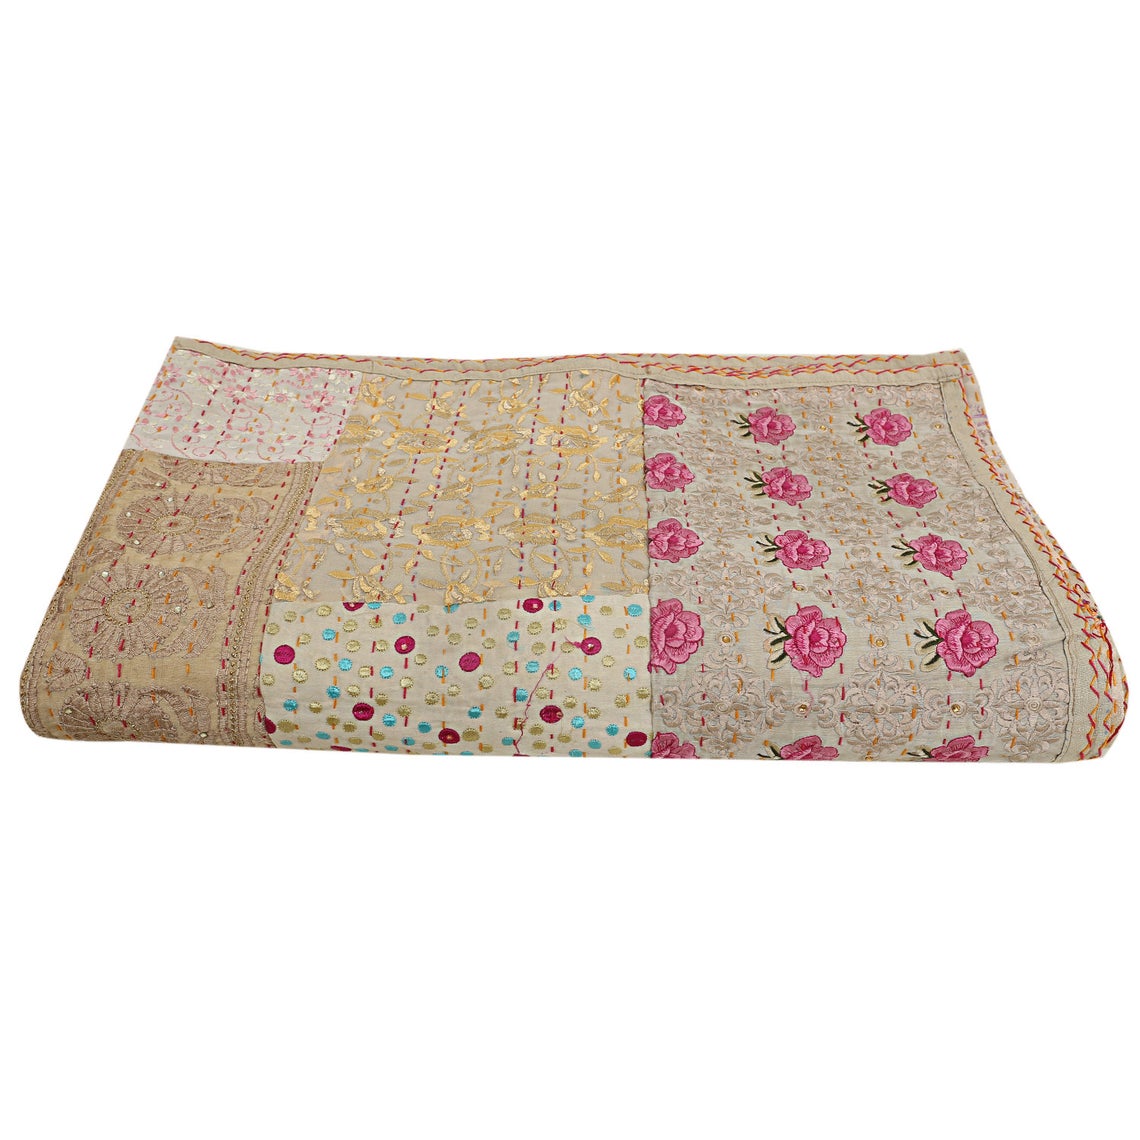 New Cotton Kantha Quilt Indian Ralli Gudari All Color Handmade Blanket Bedspread 